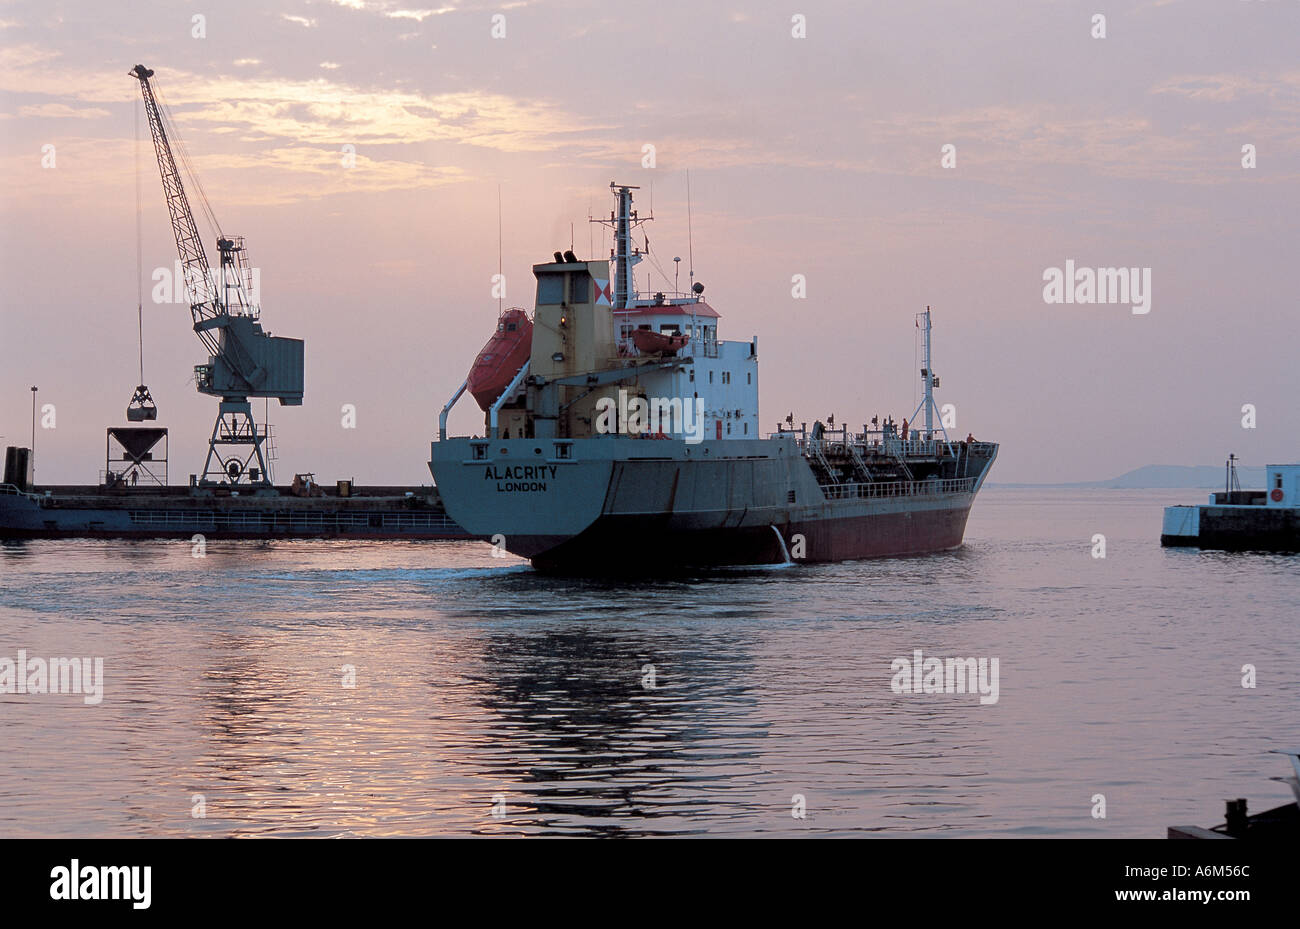 The Alacrity Ship leaving St Sampson Port Stock Photo